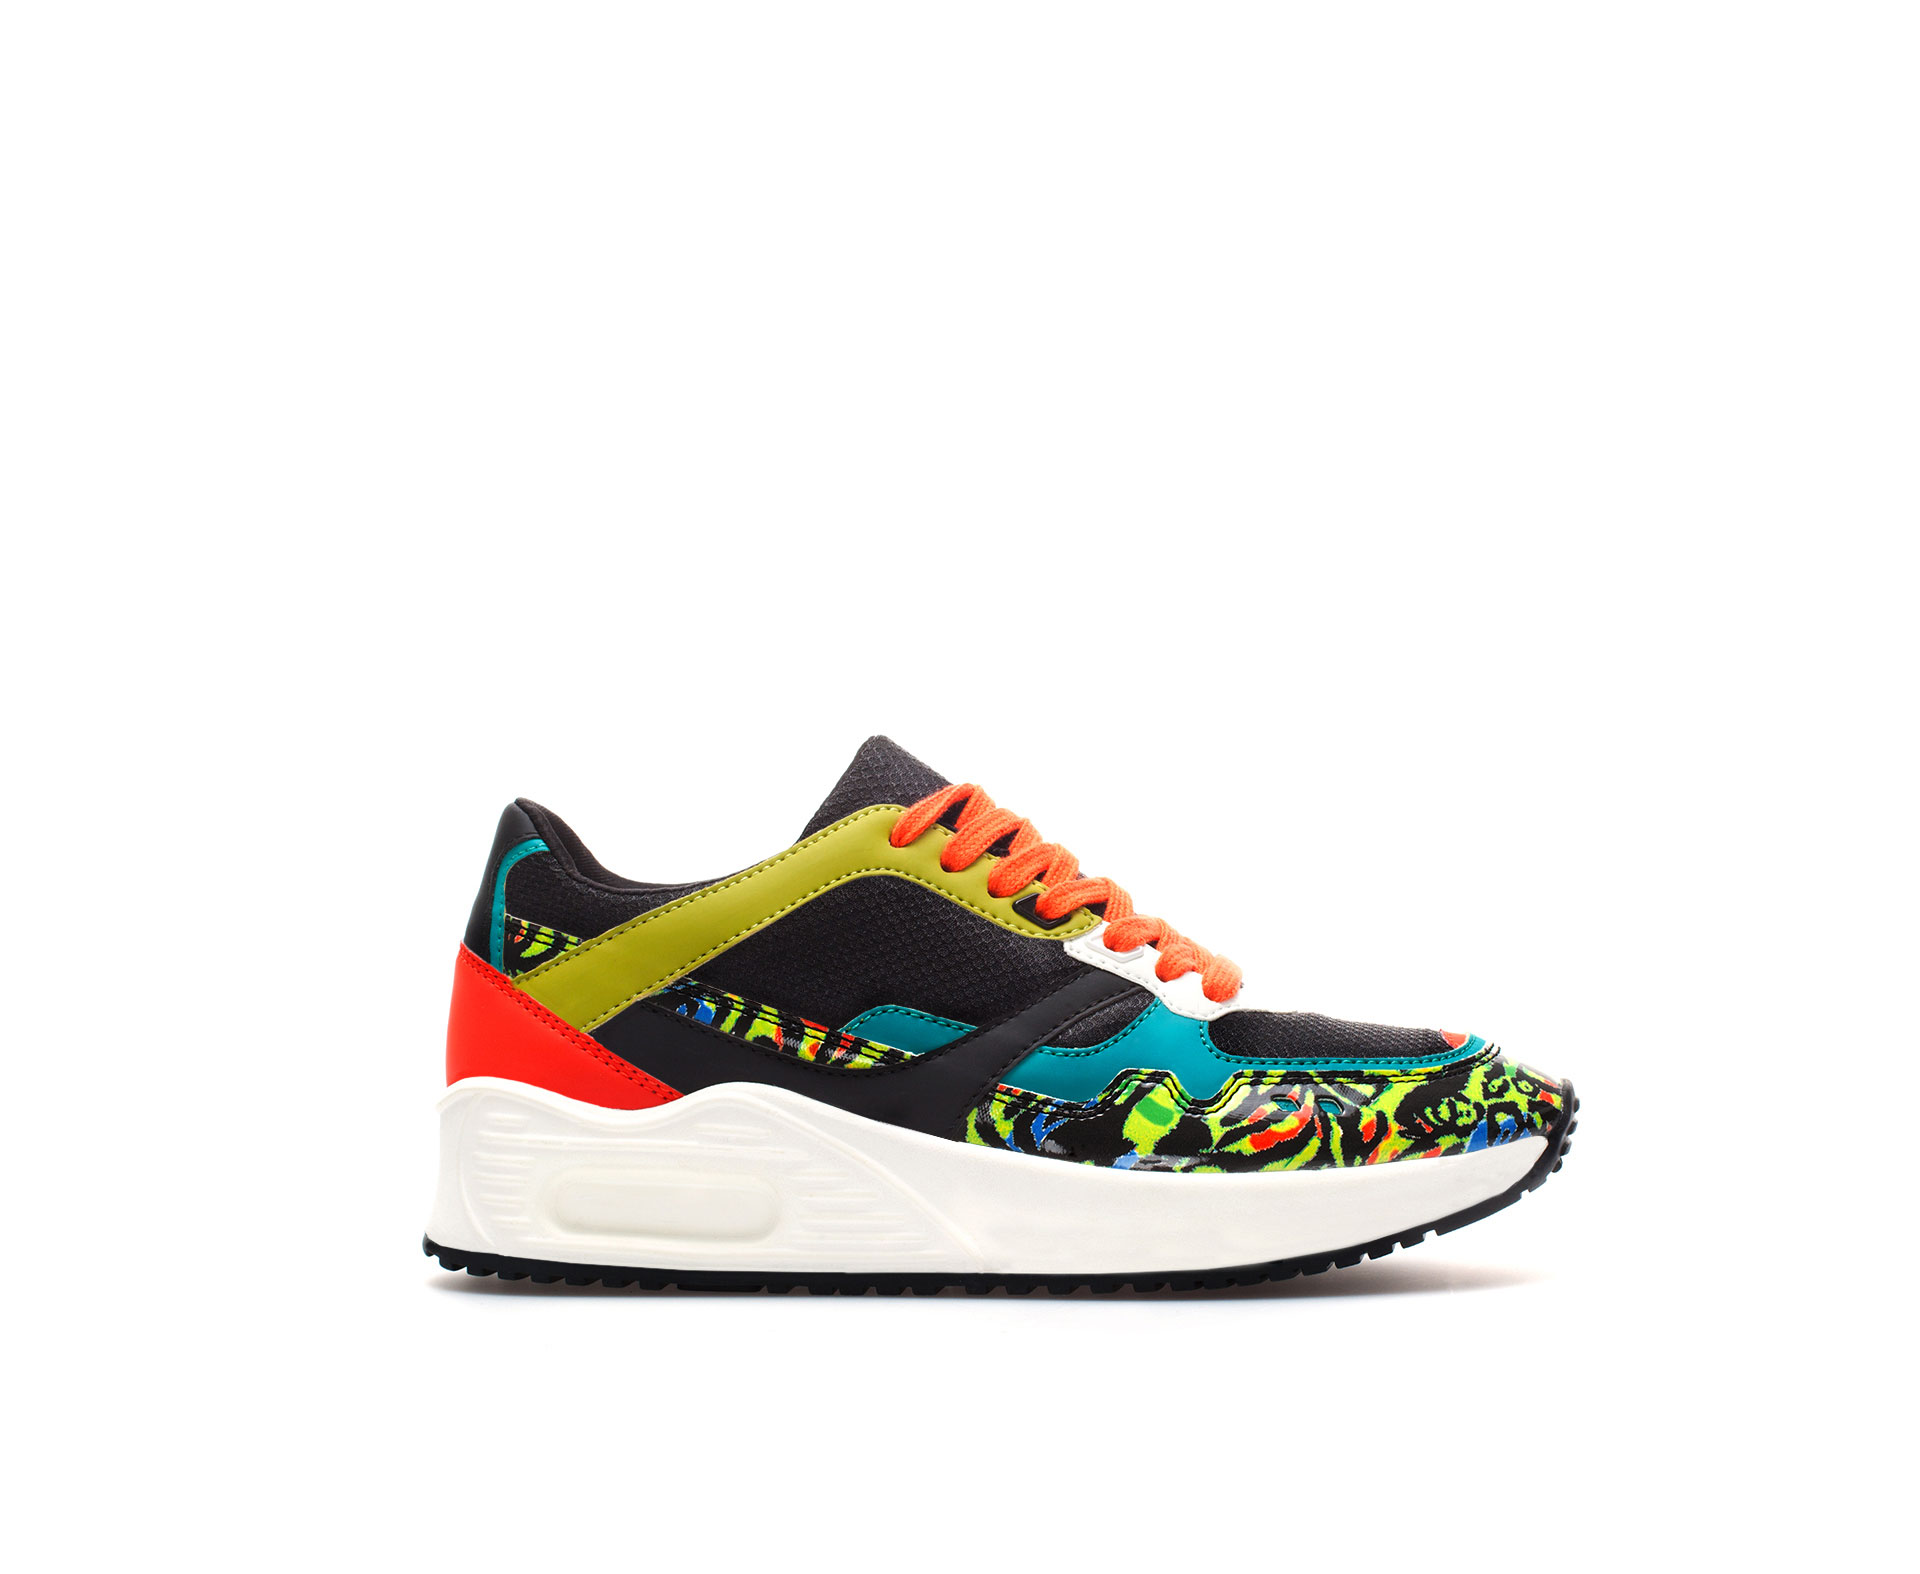 Zara Trf Combo Running Shoe in Multicolor (Multicolour) | Lyst